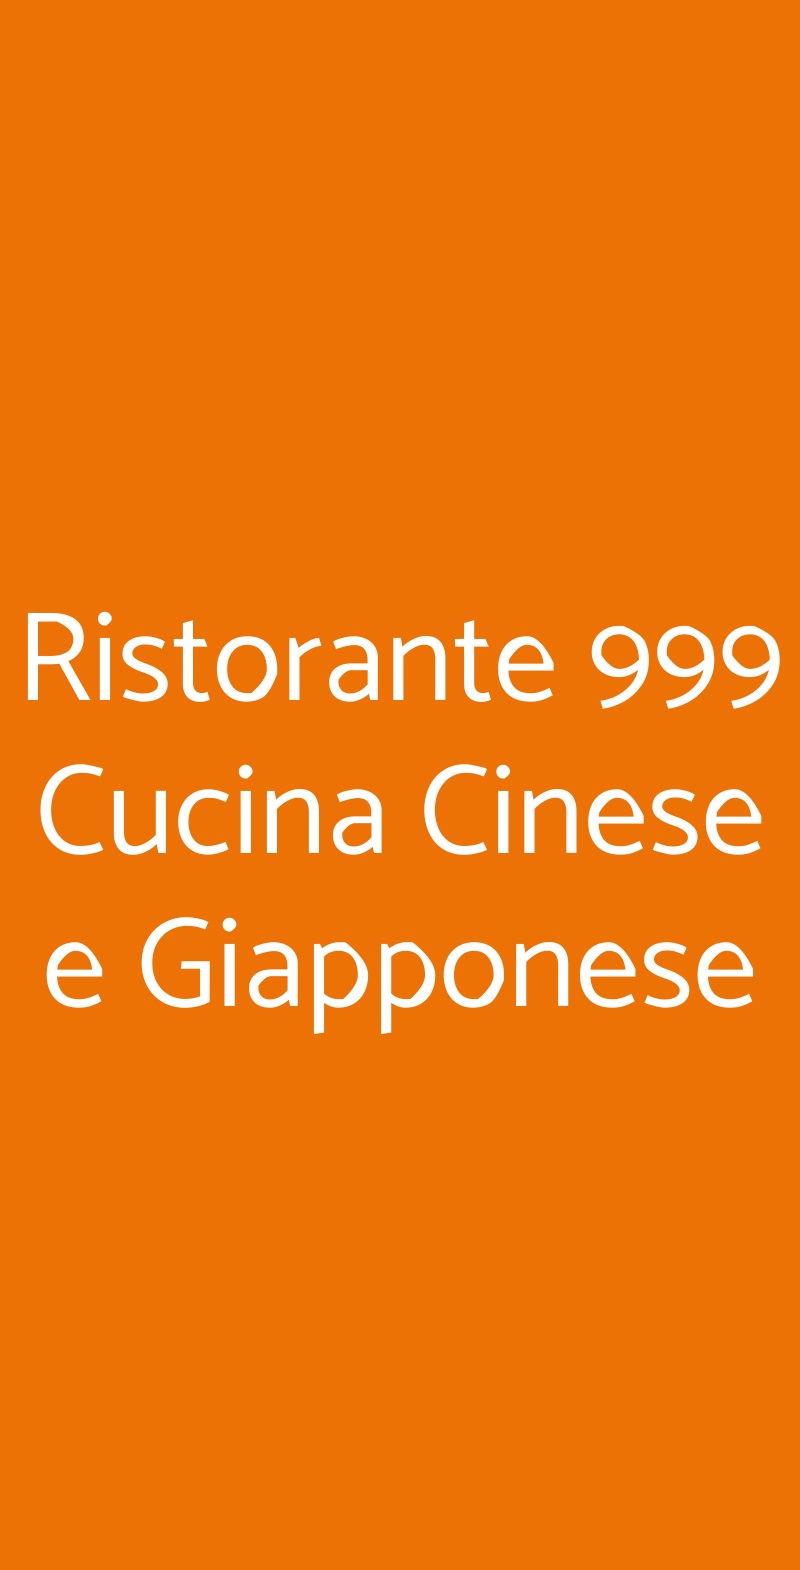 Ristorante 999 Cucina Cinese e Giapponese Roma menù 1 pagina